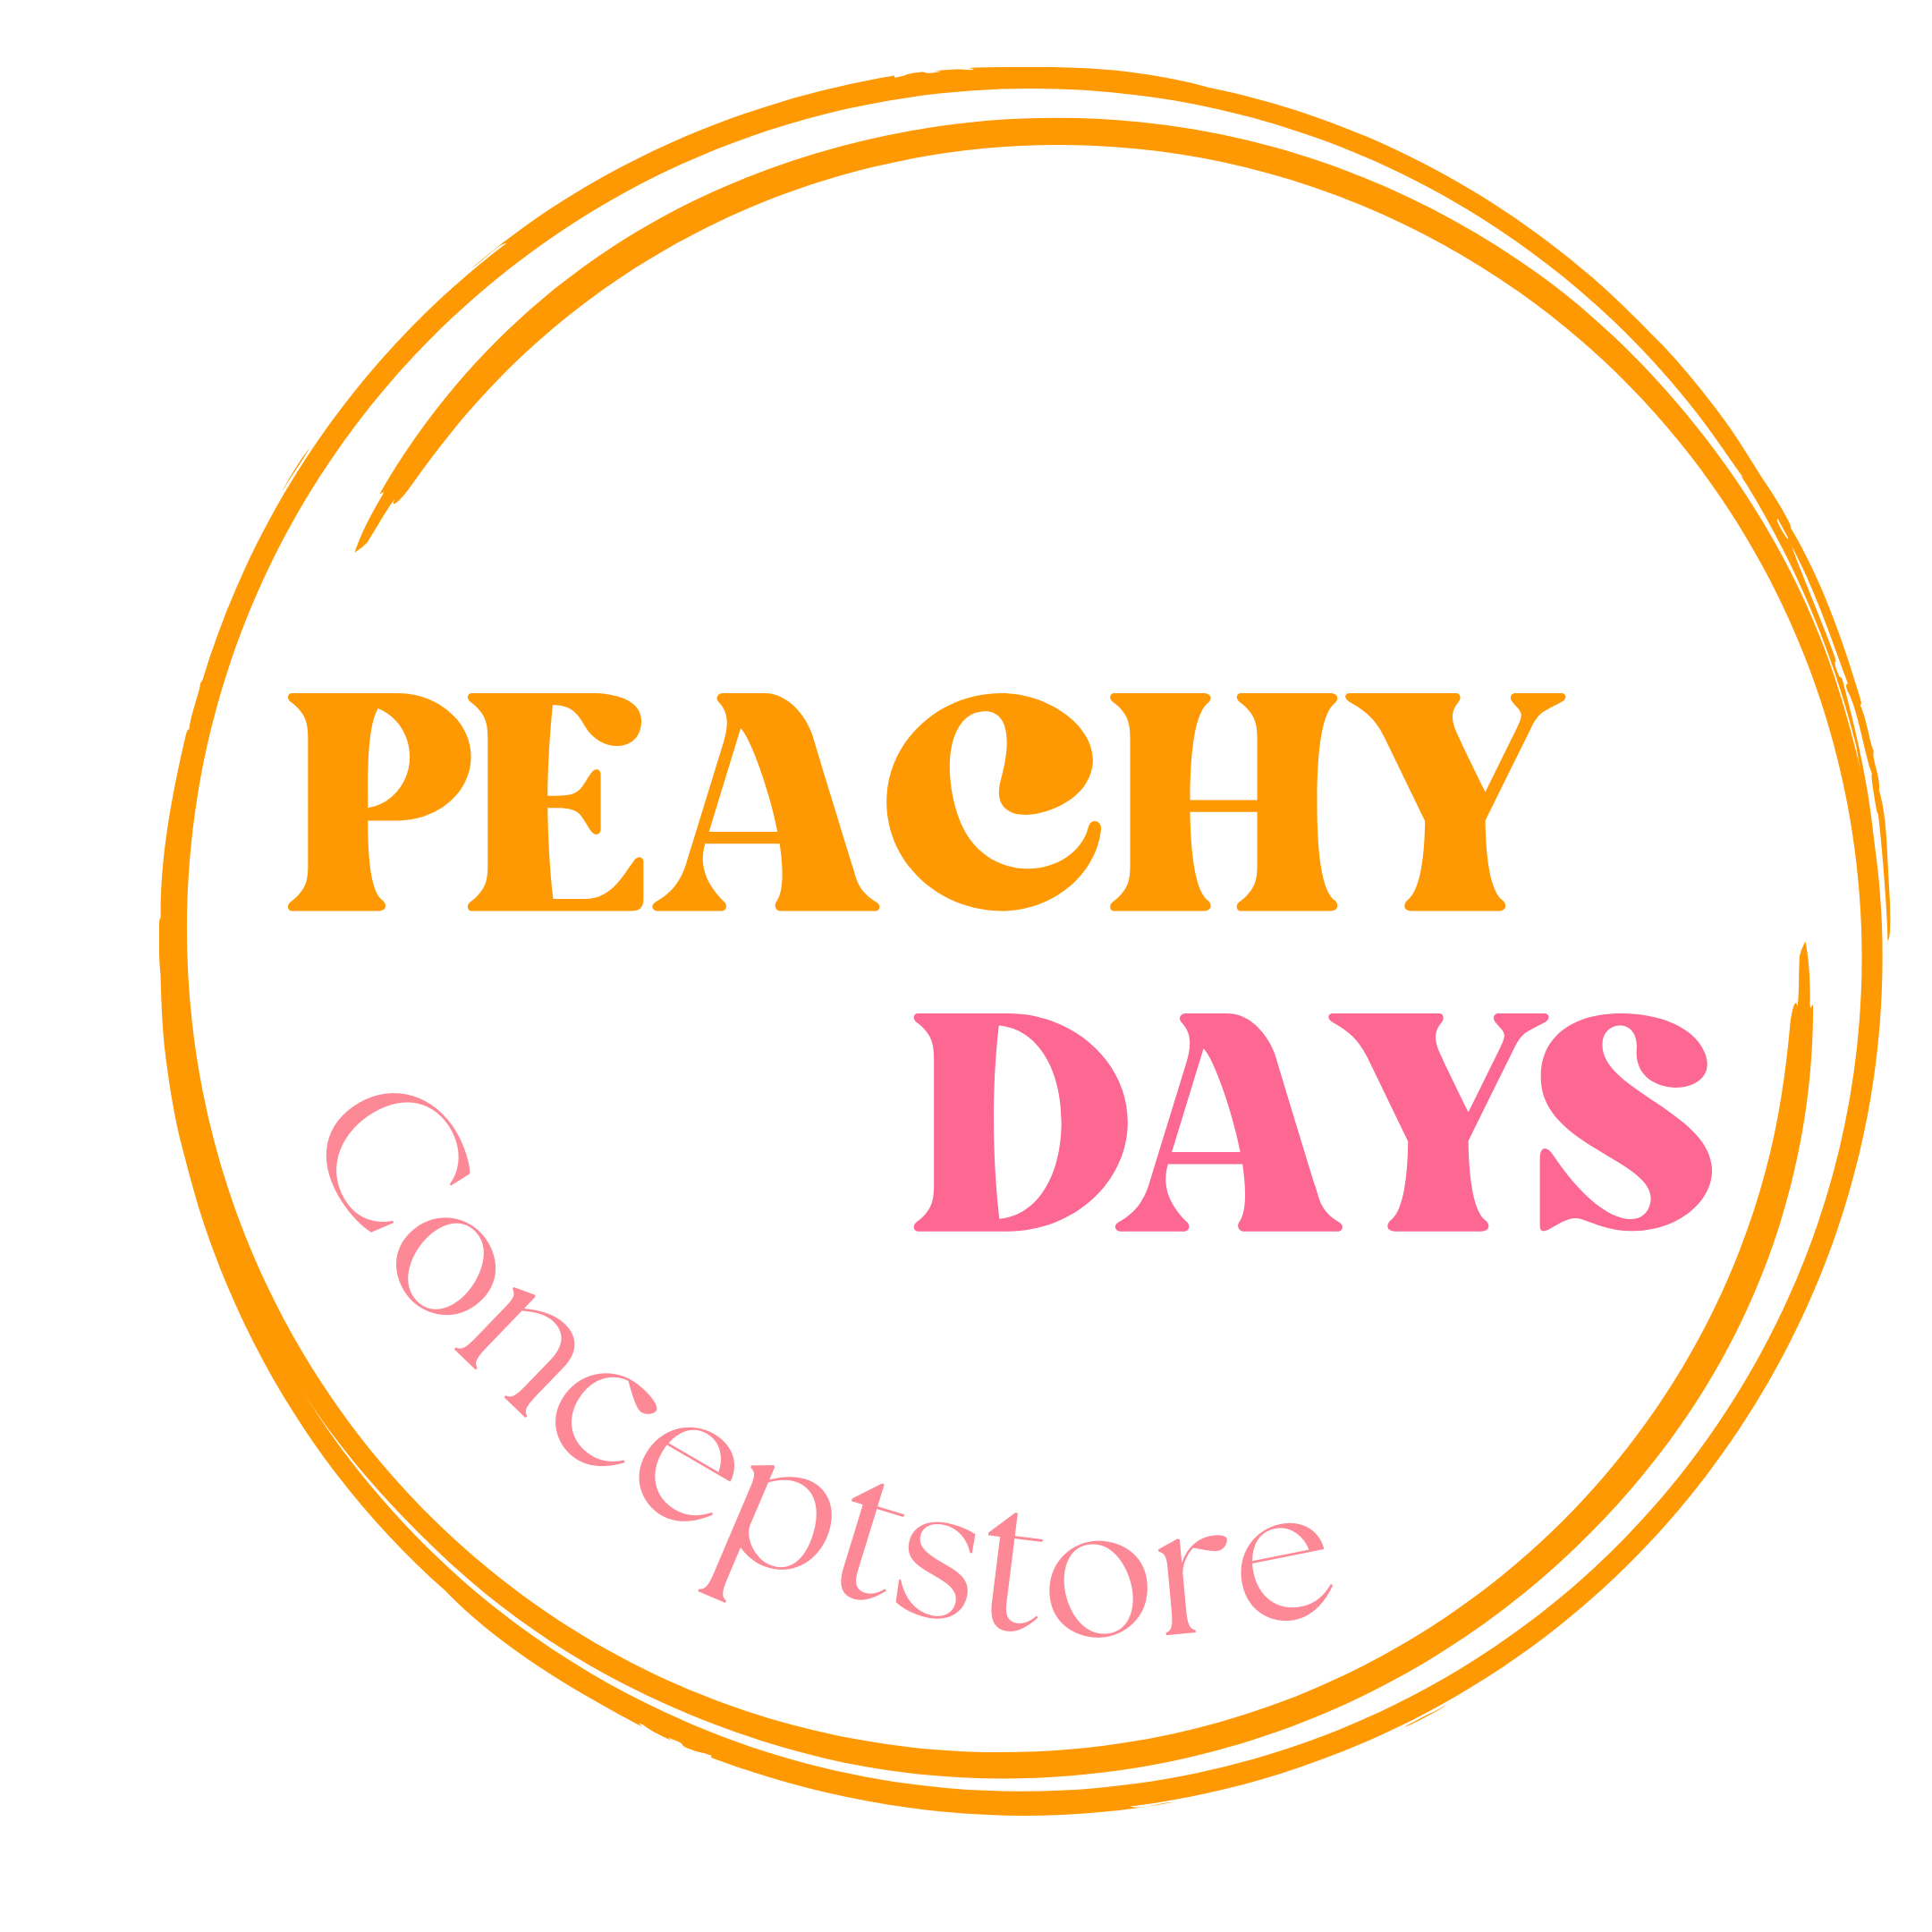 Peachy Days